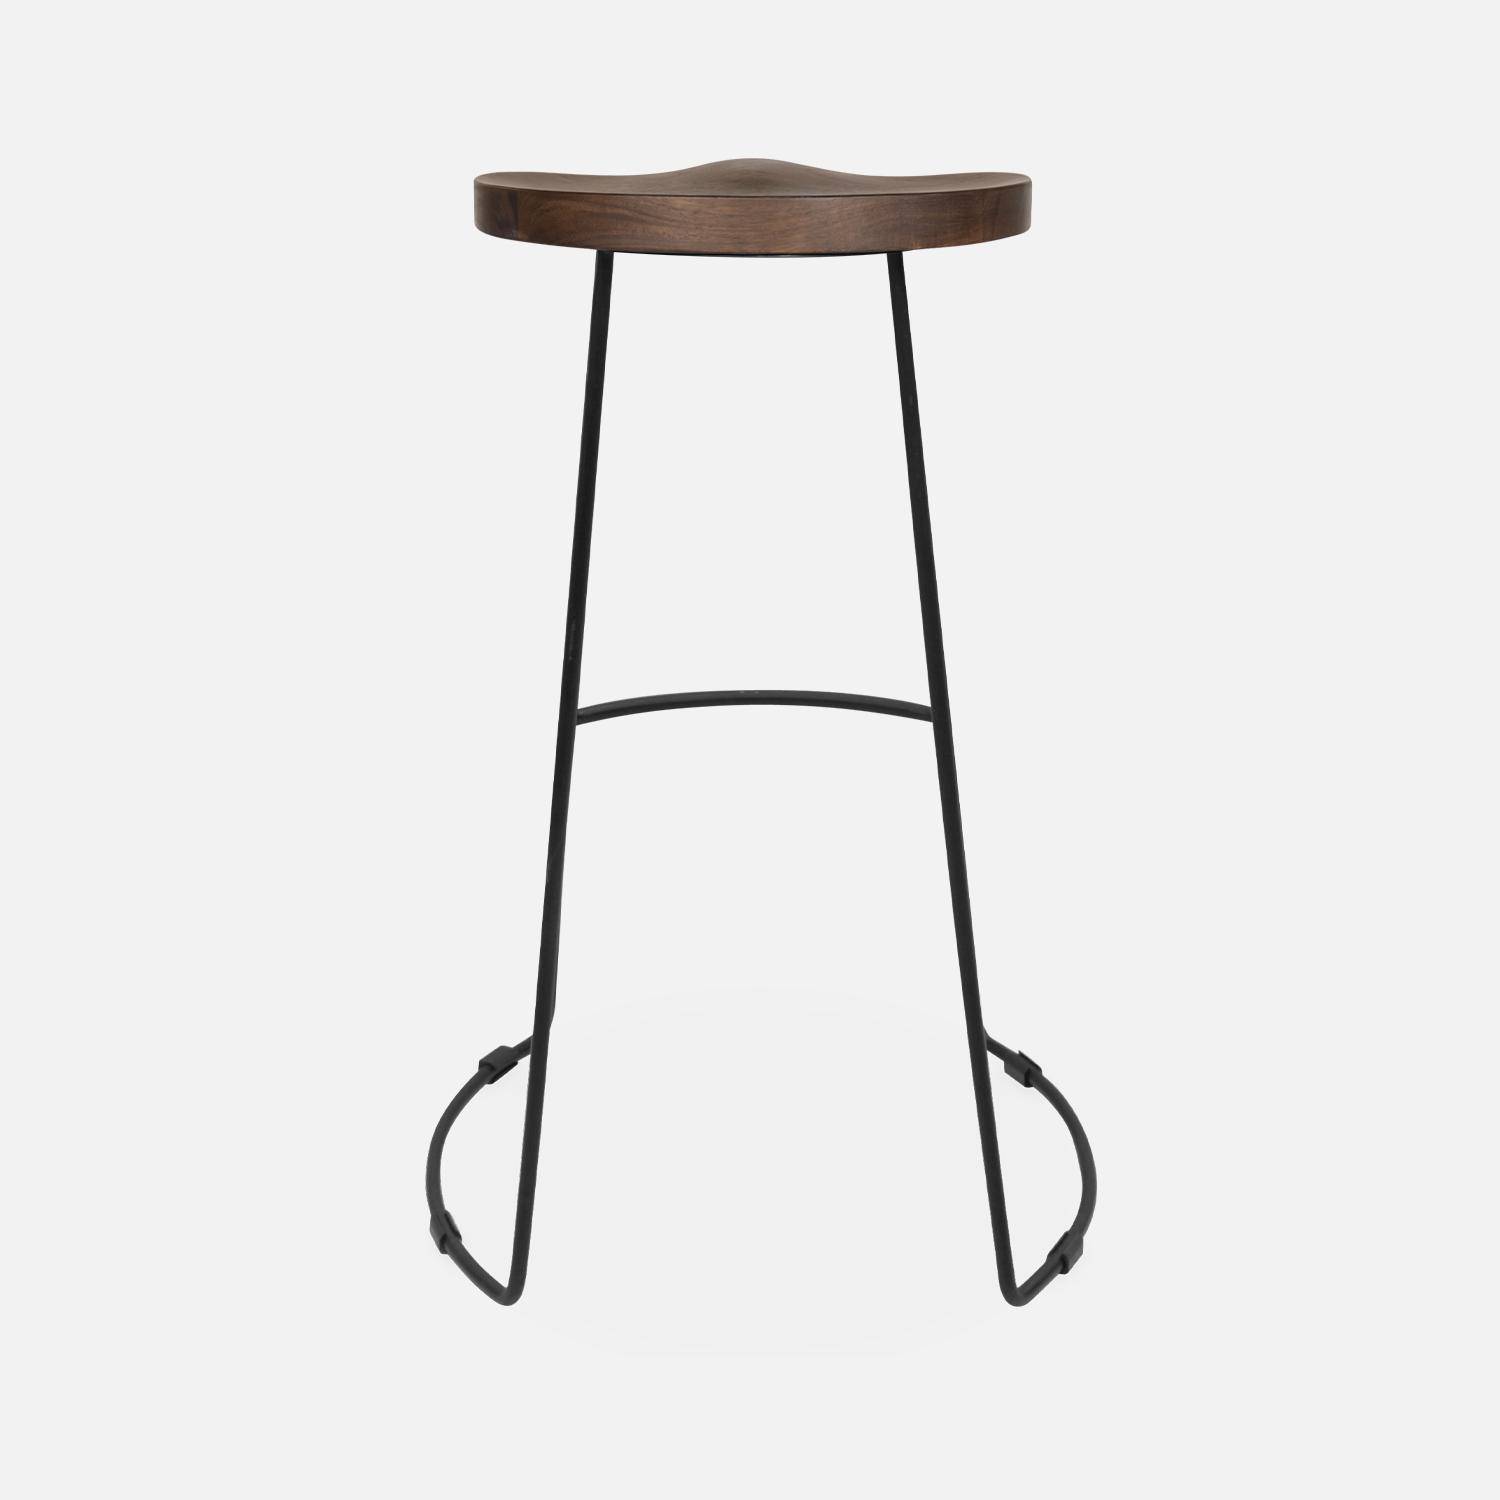 Pair of industrial metal and wooden bar stools, 47x40x75cm, Jaya, Light Walnut, Mango wood seat, black metal legs Photo6